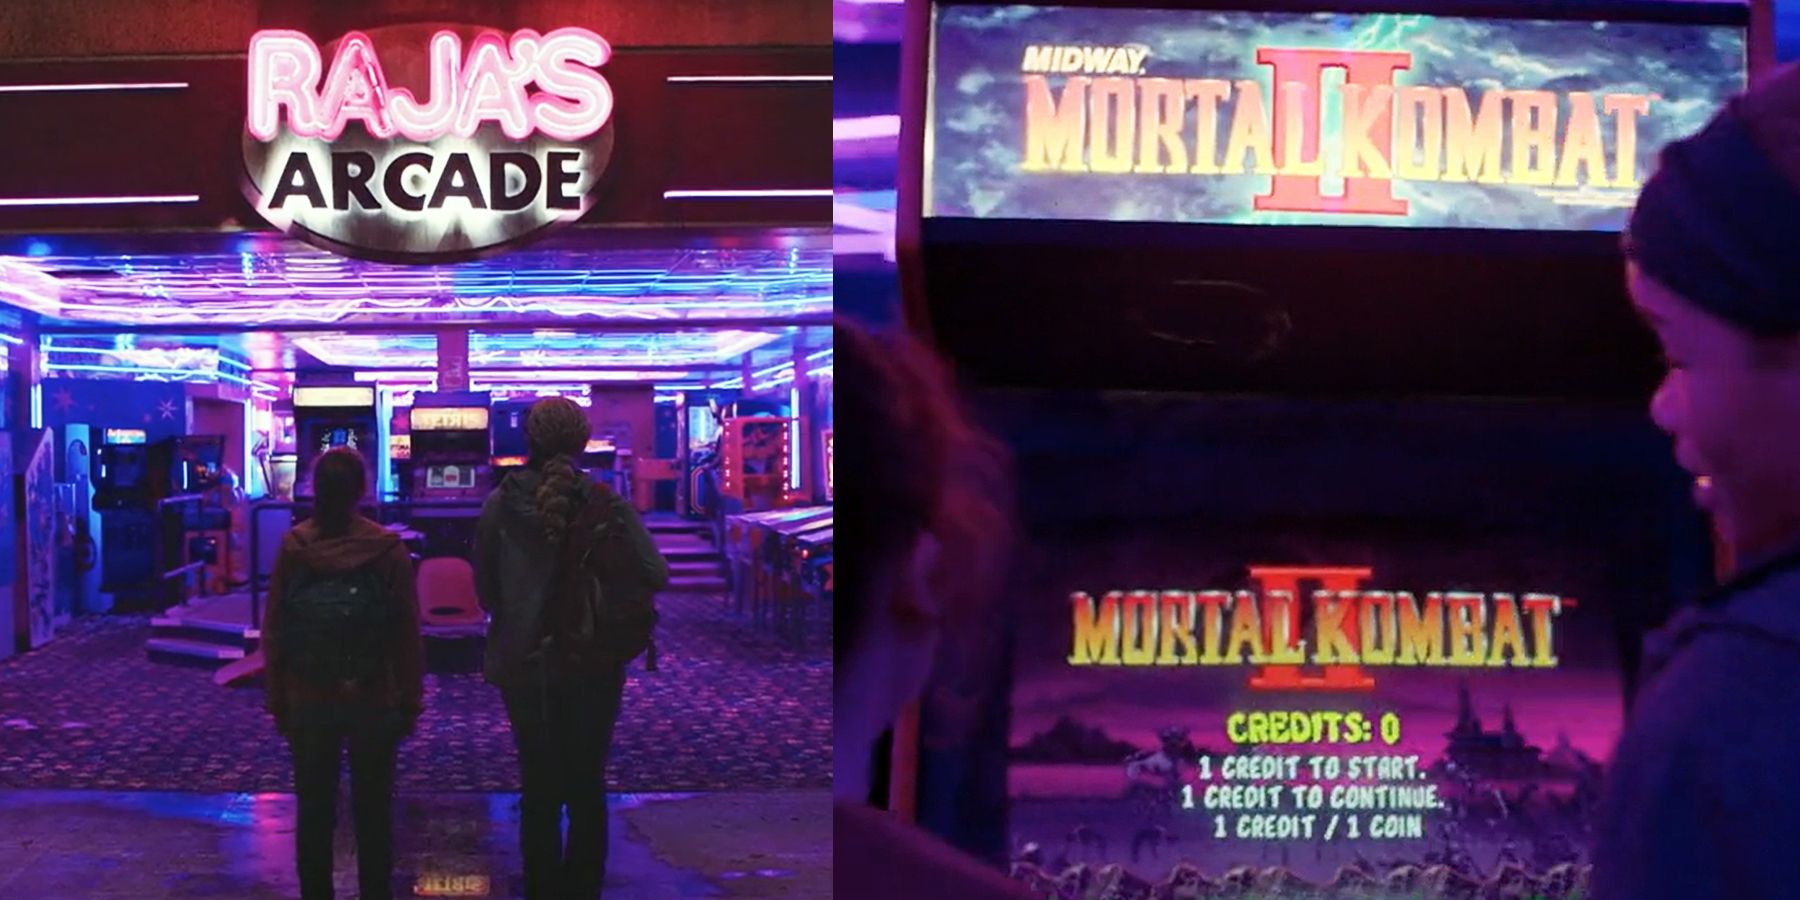 The Last of Us arcade